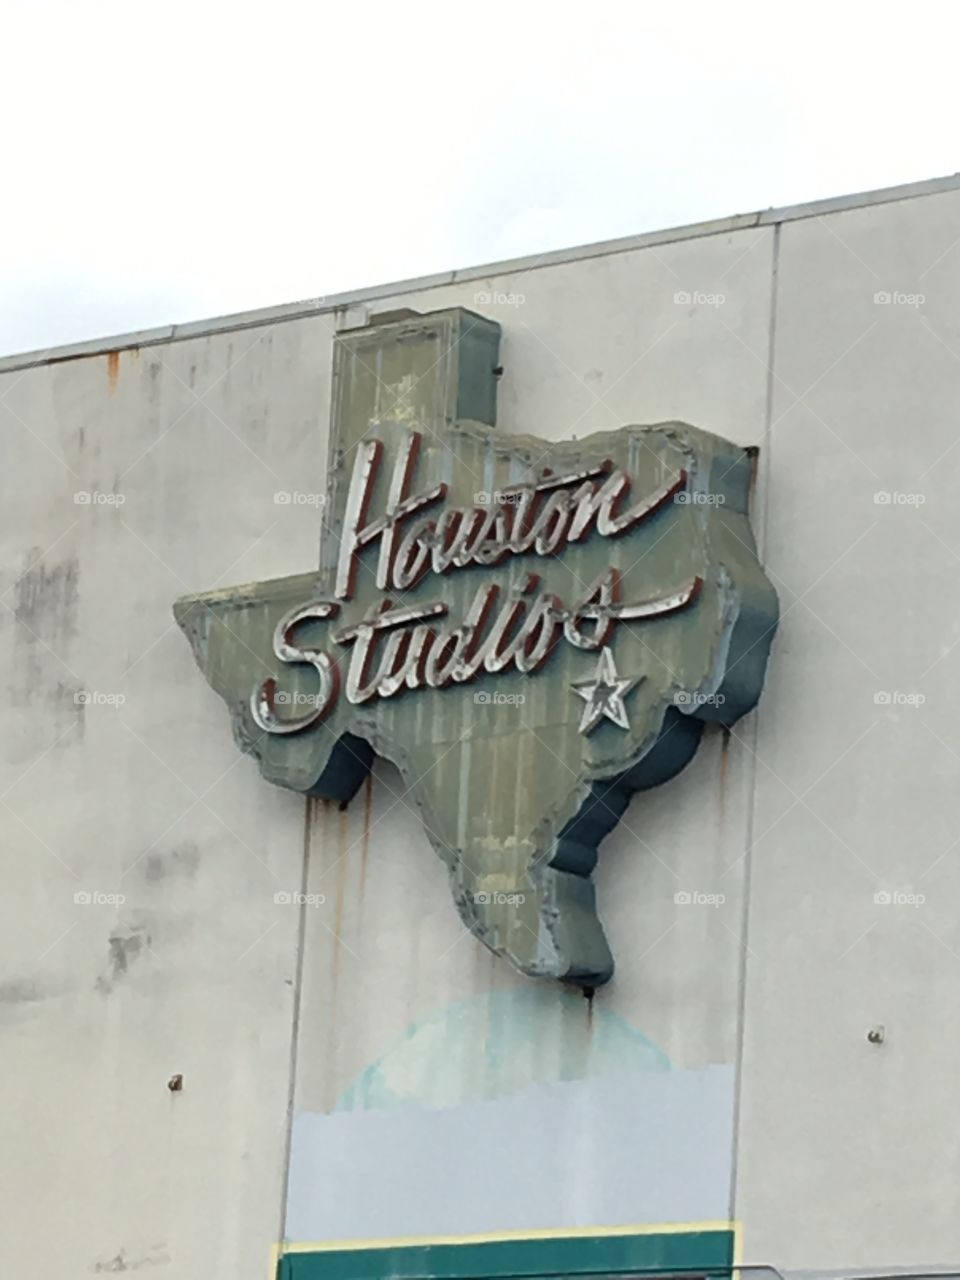 Houston Studios sign 
Old Houston film studio now rental space 
